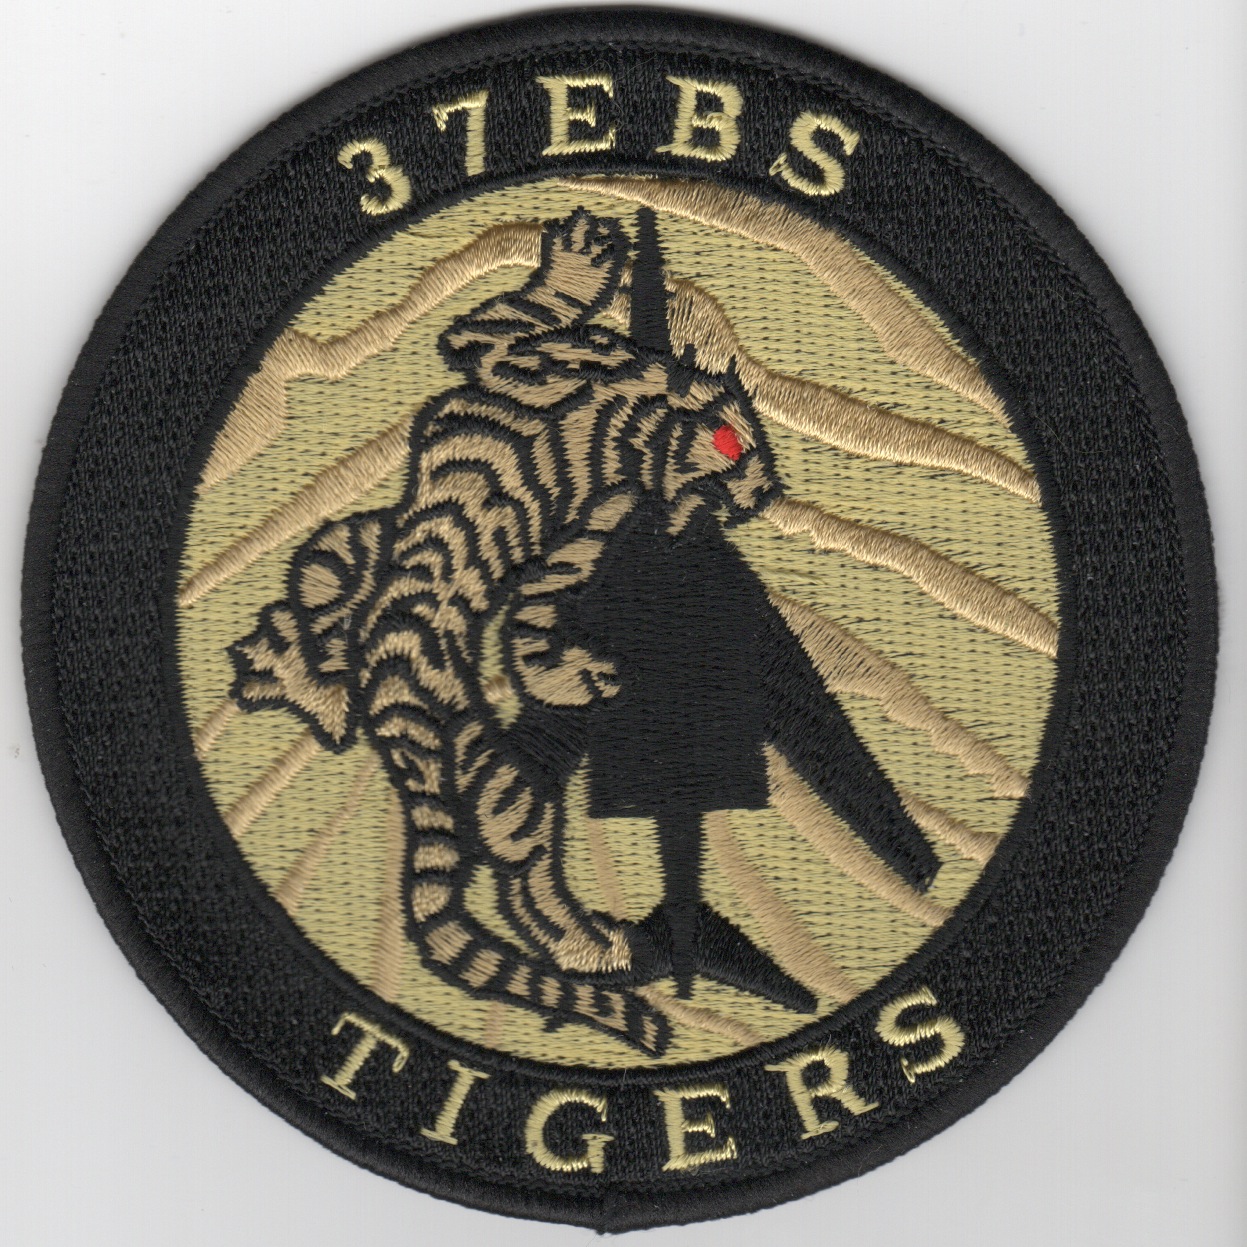 37EBS 'Tiger on B-1 Planform' (Velcro)